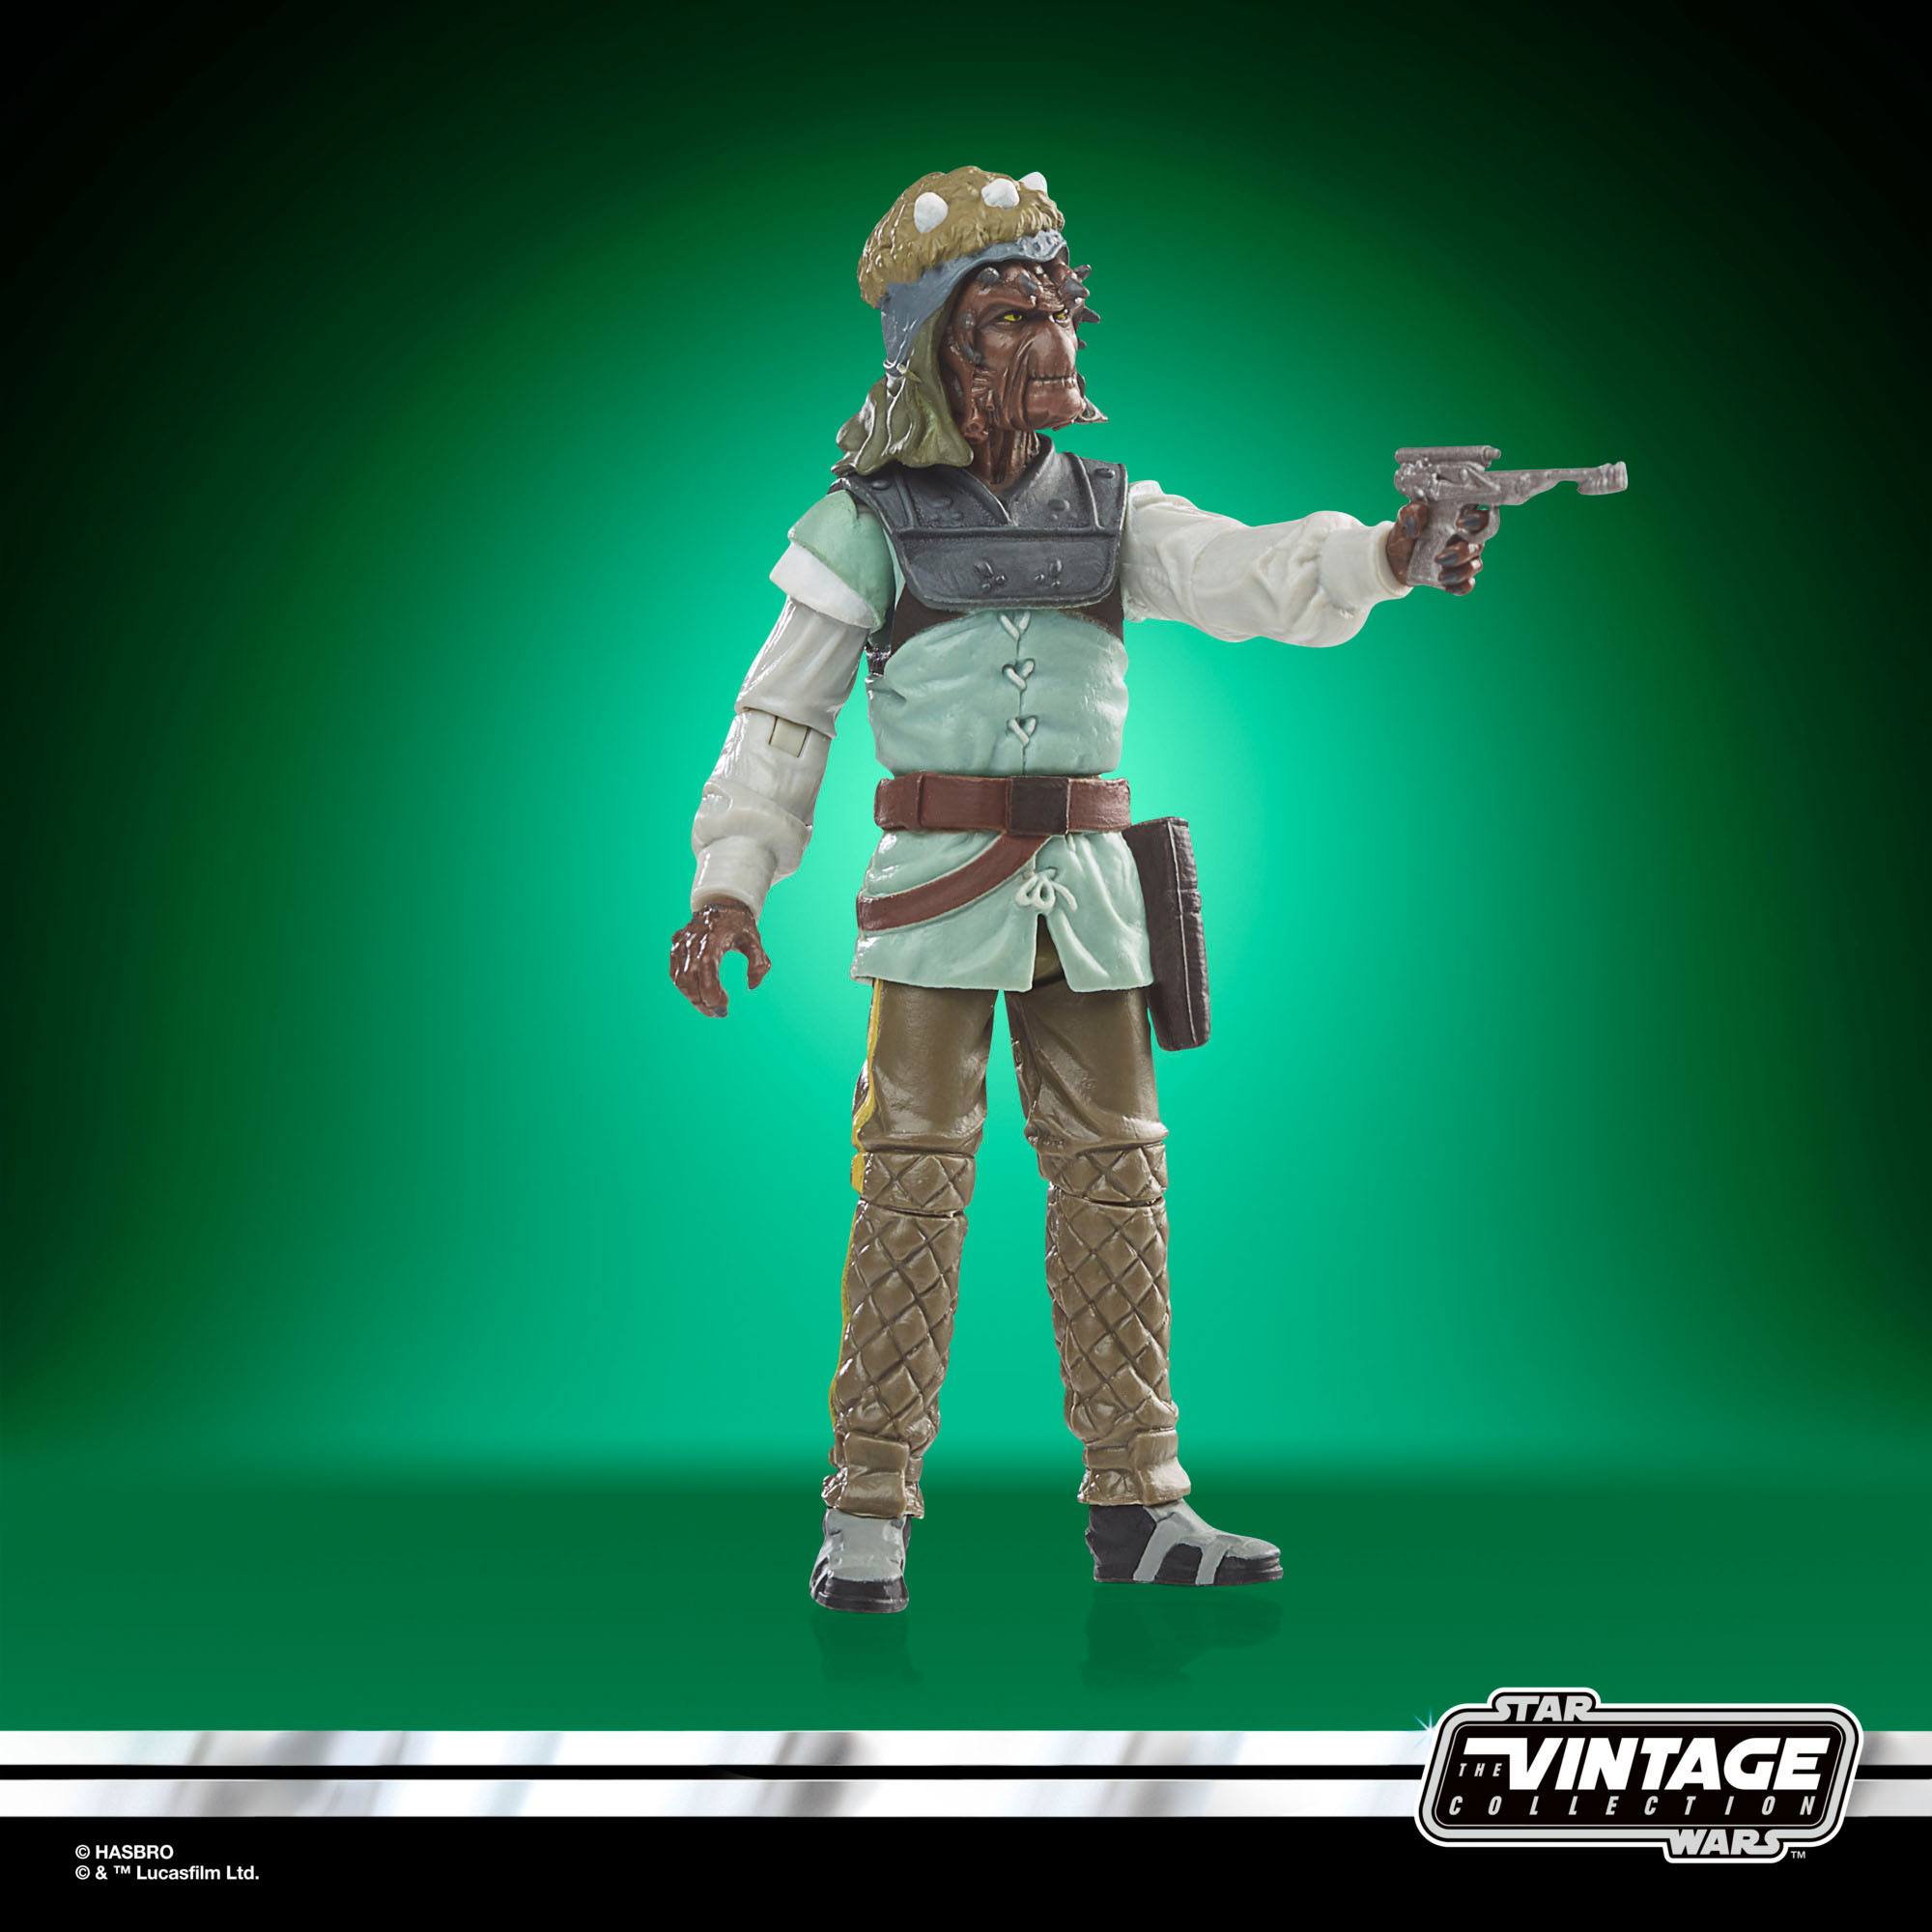 Star Wars Episode VI Vintage Collection Actionfigur Nikto (Skiff Guard) 10 cm F73375L00 5010996124760